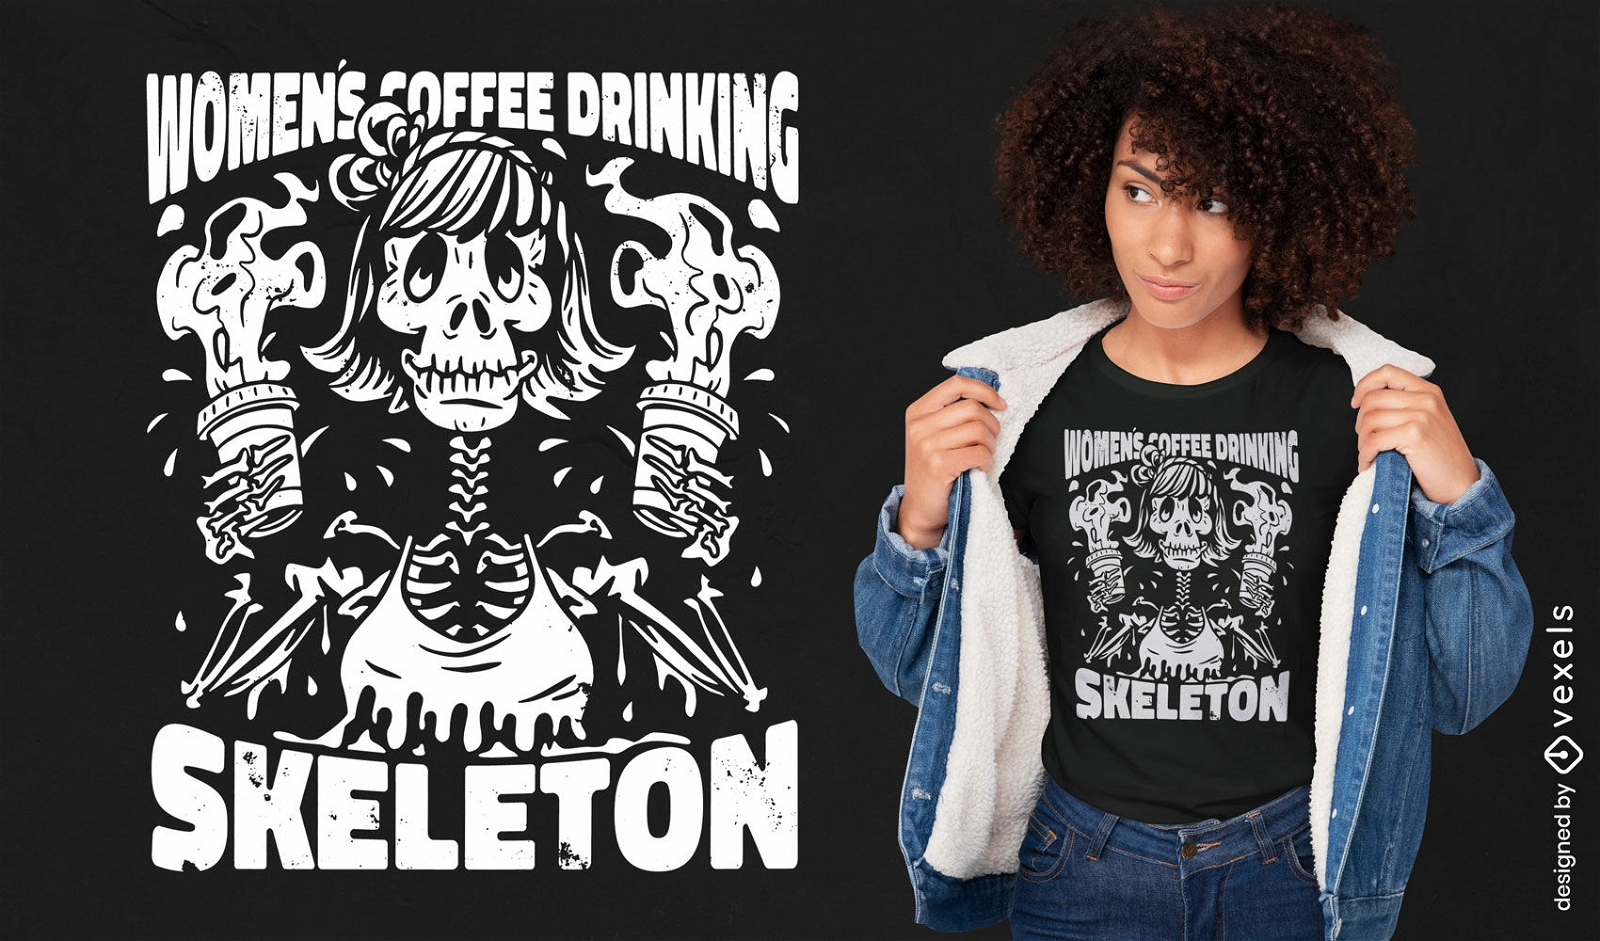 Skeleton woman drinking coffee t-shirt design